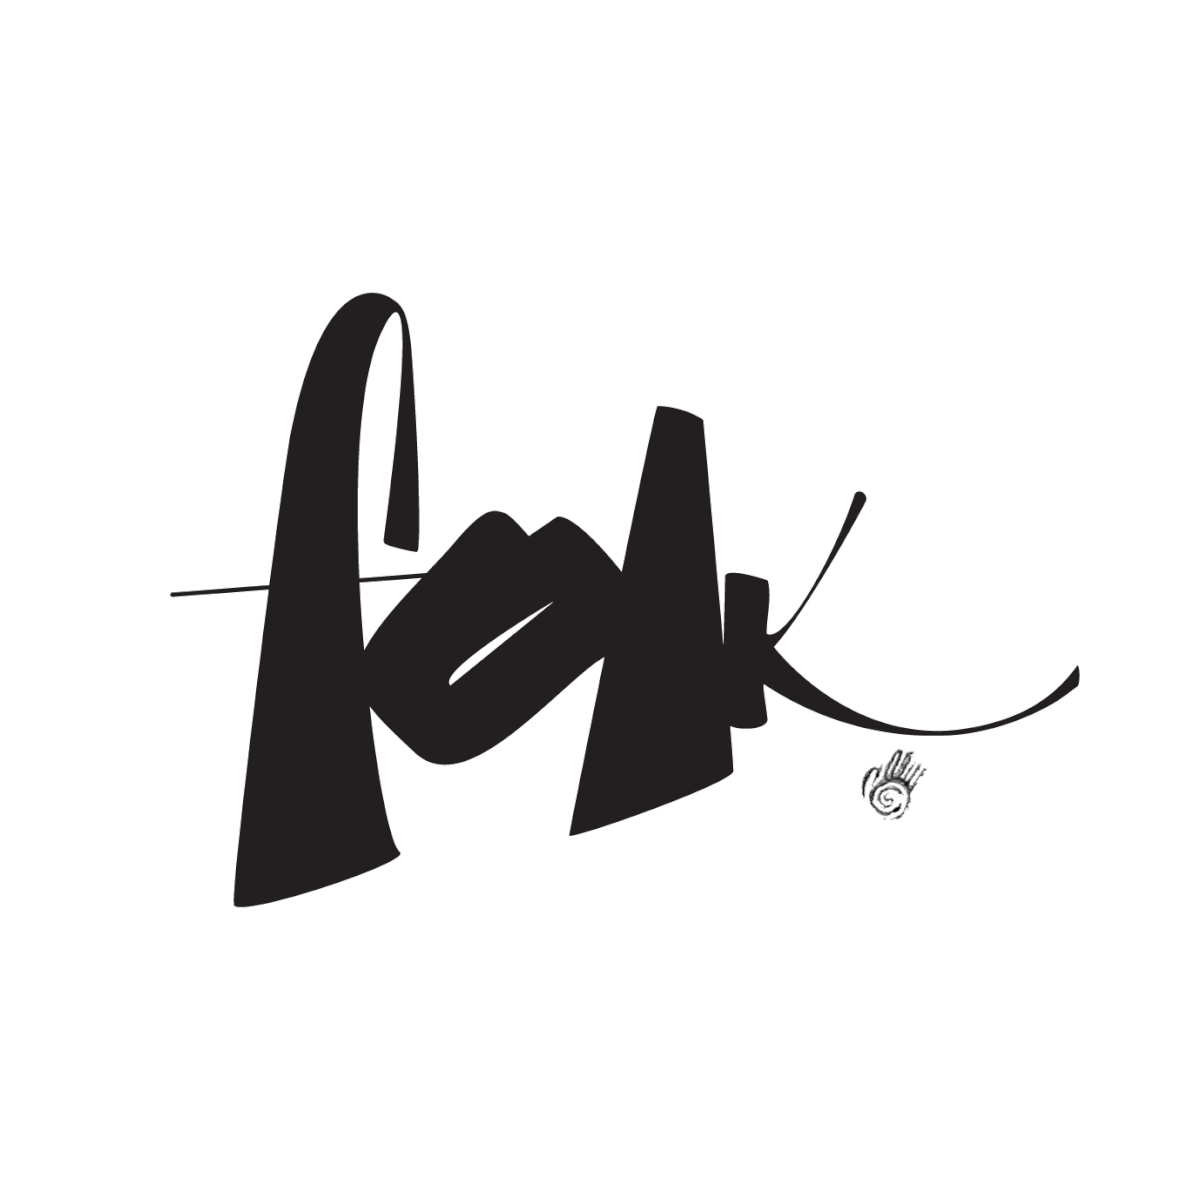 calli drawn letters lettering art